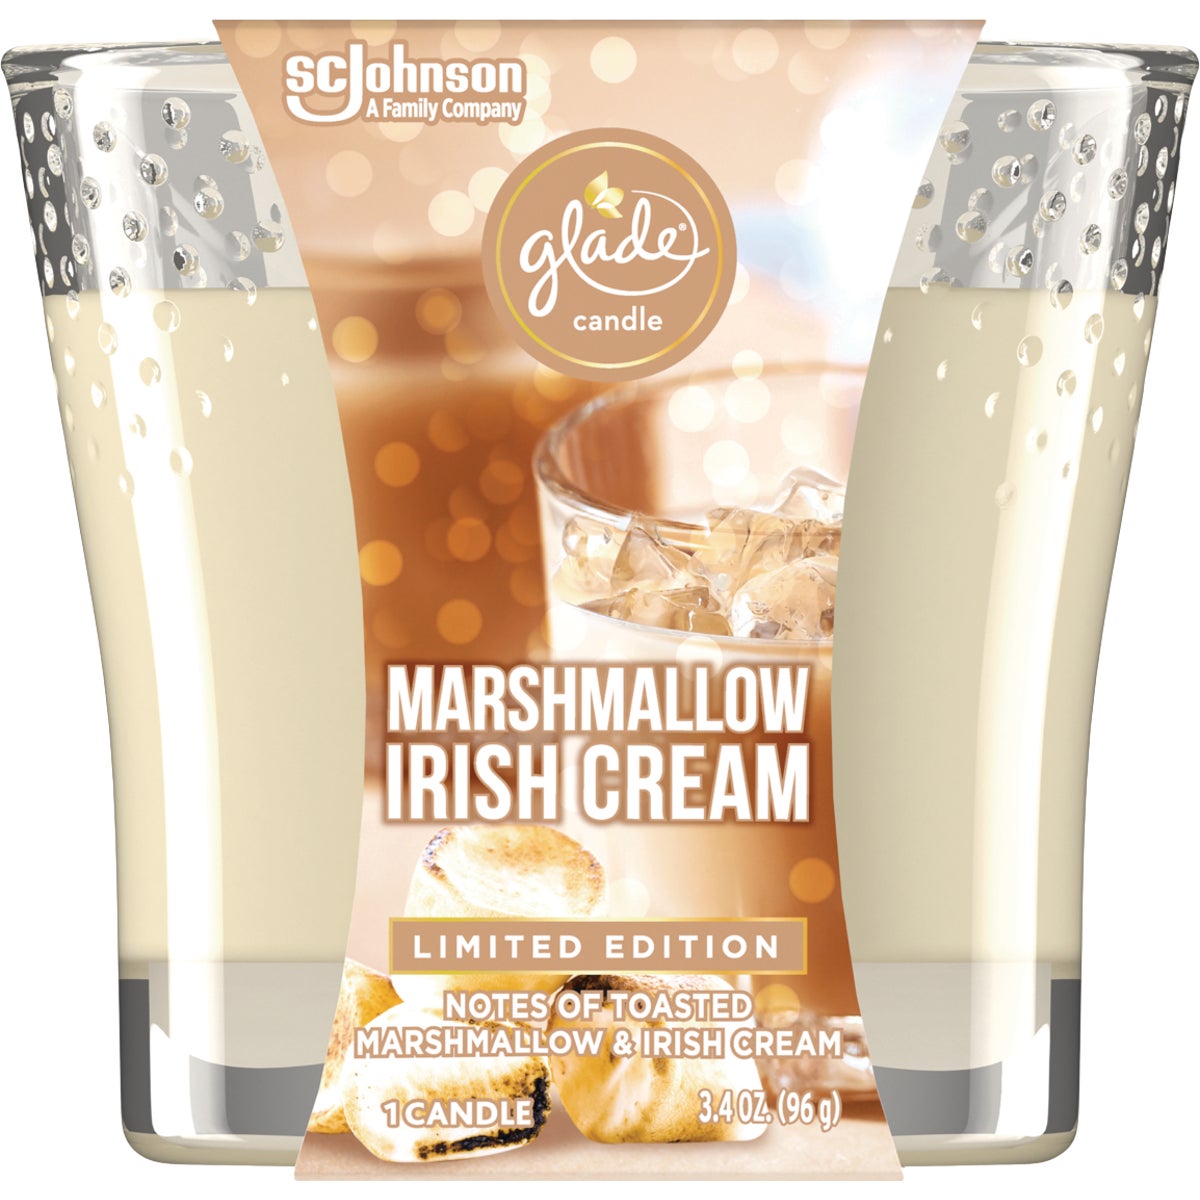 Glade 3.4 Oz. Marshmallow Irish Cream Candle